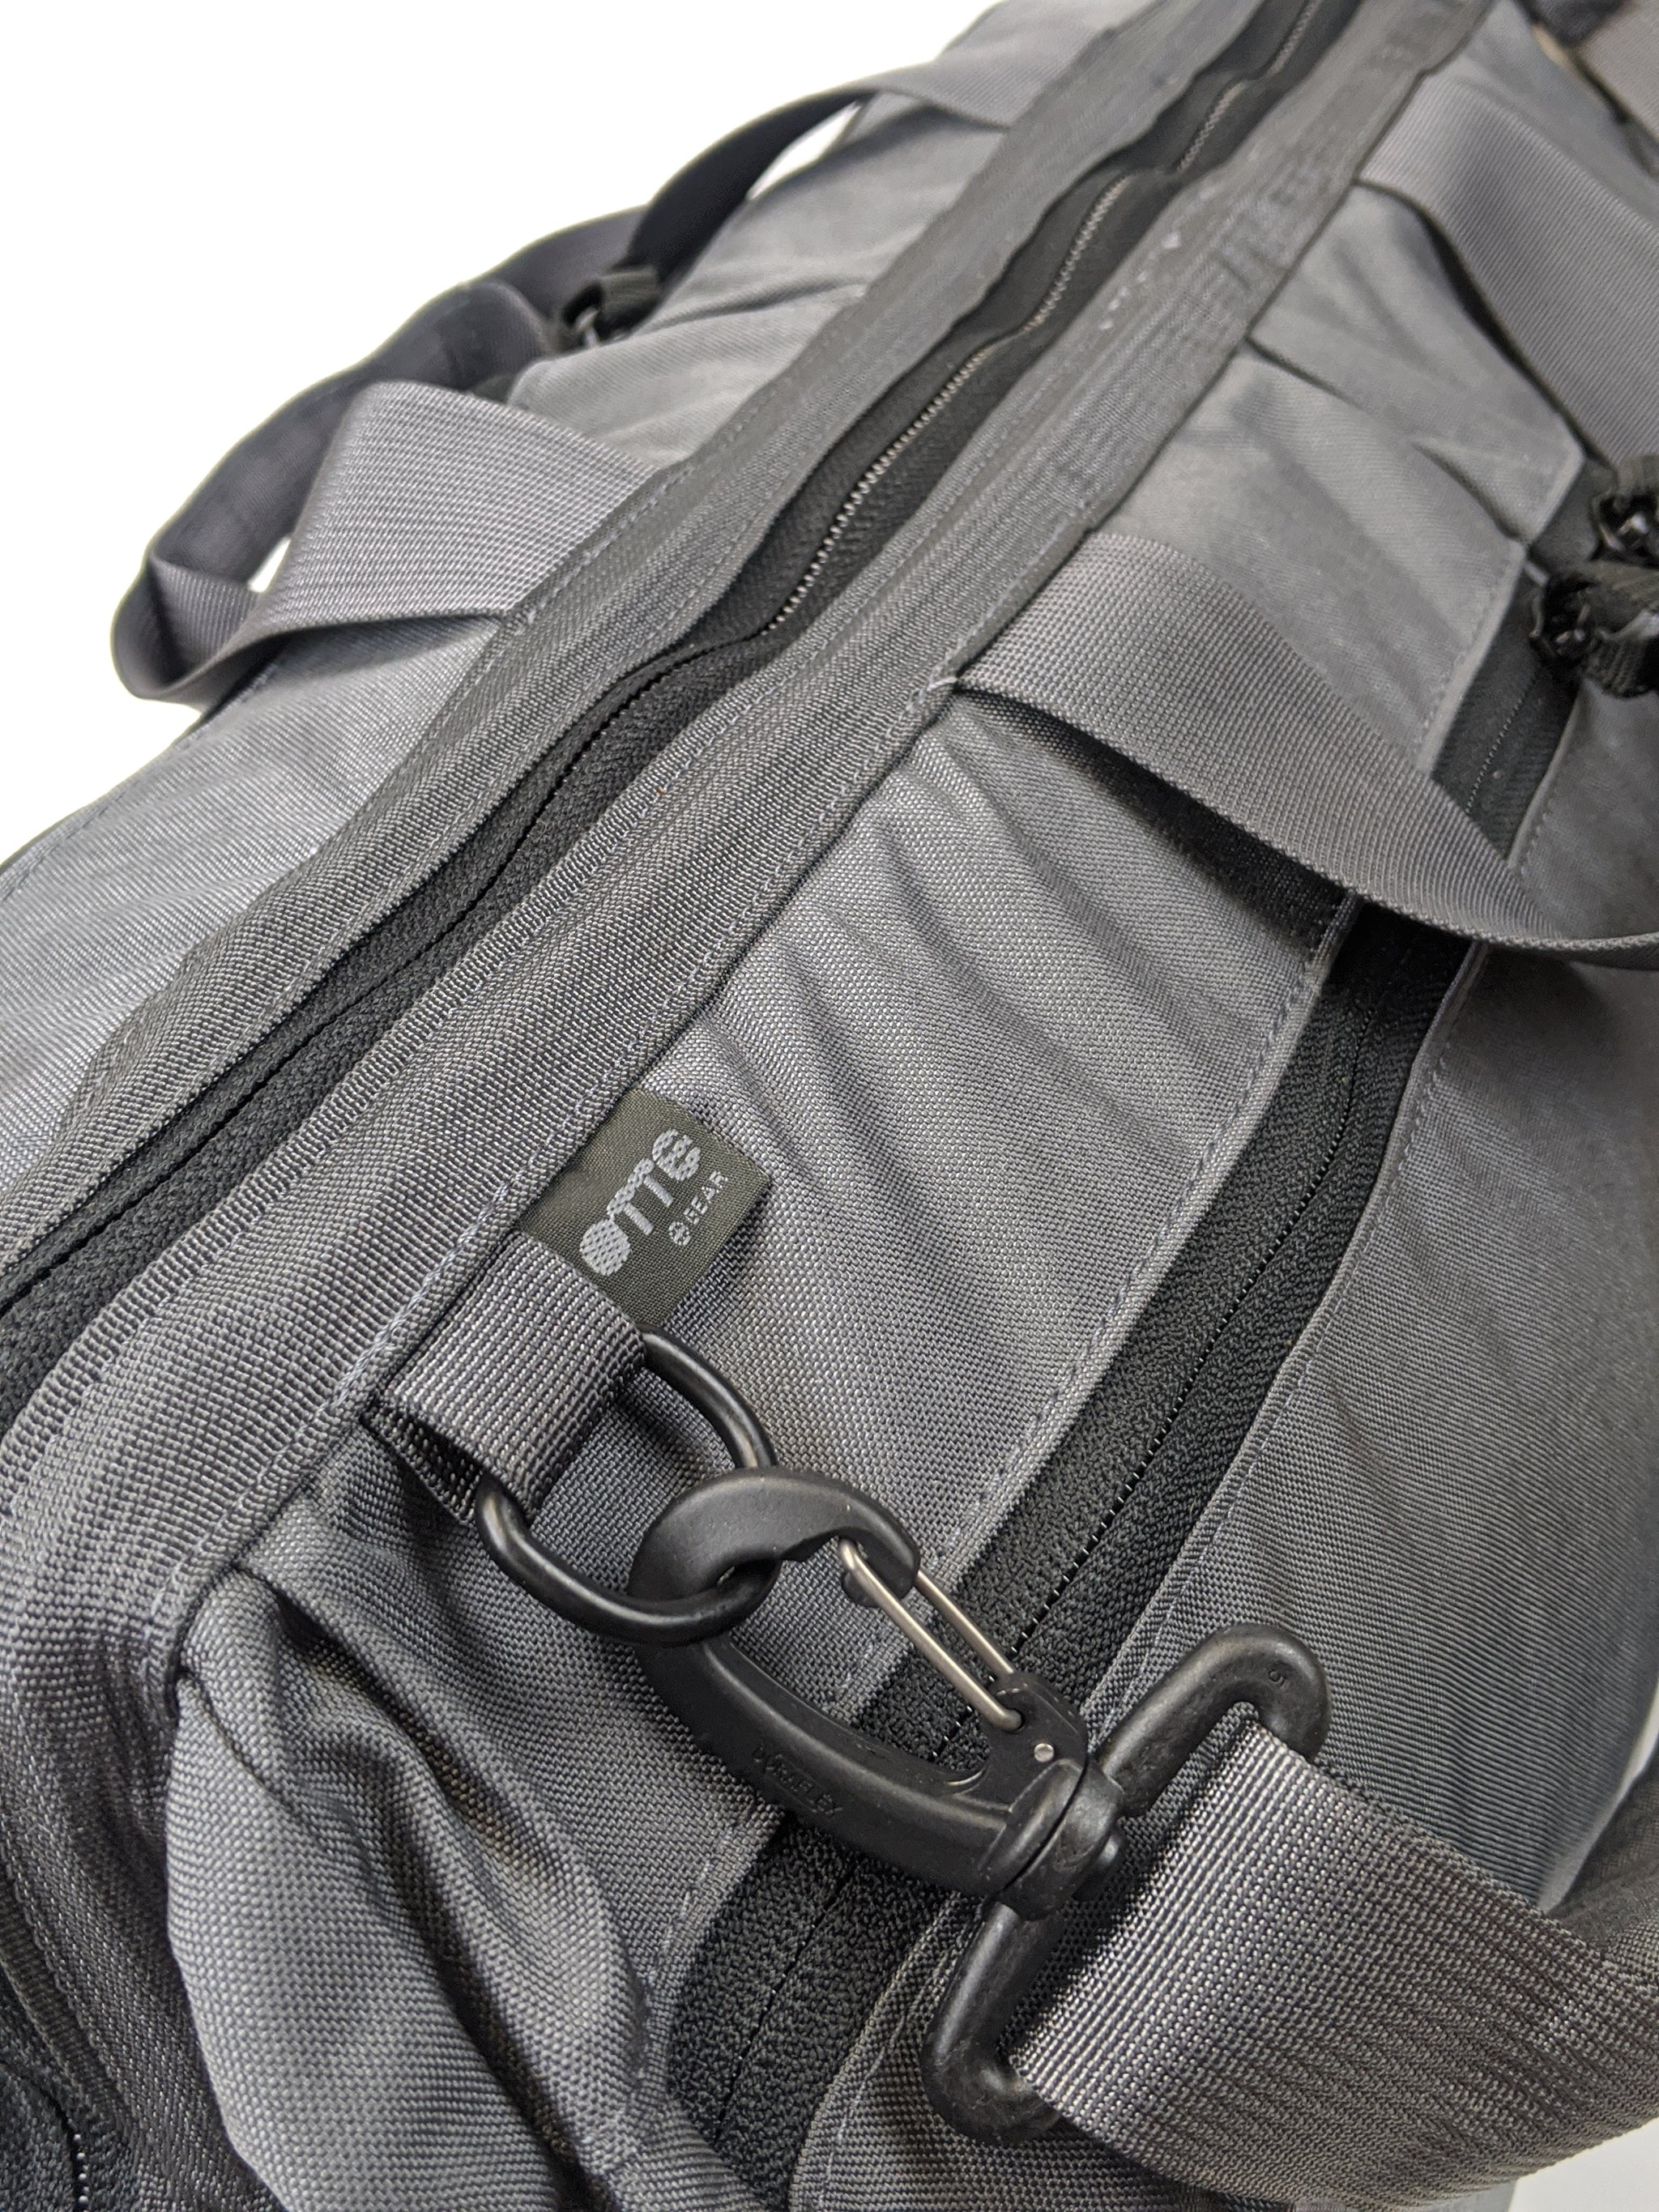 Multicam Tactical Range Bag | Gun Range Bag | OTTE Gear